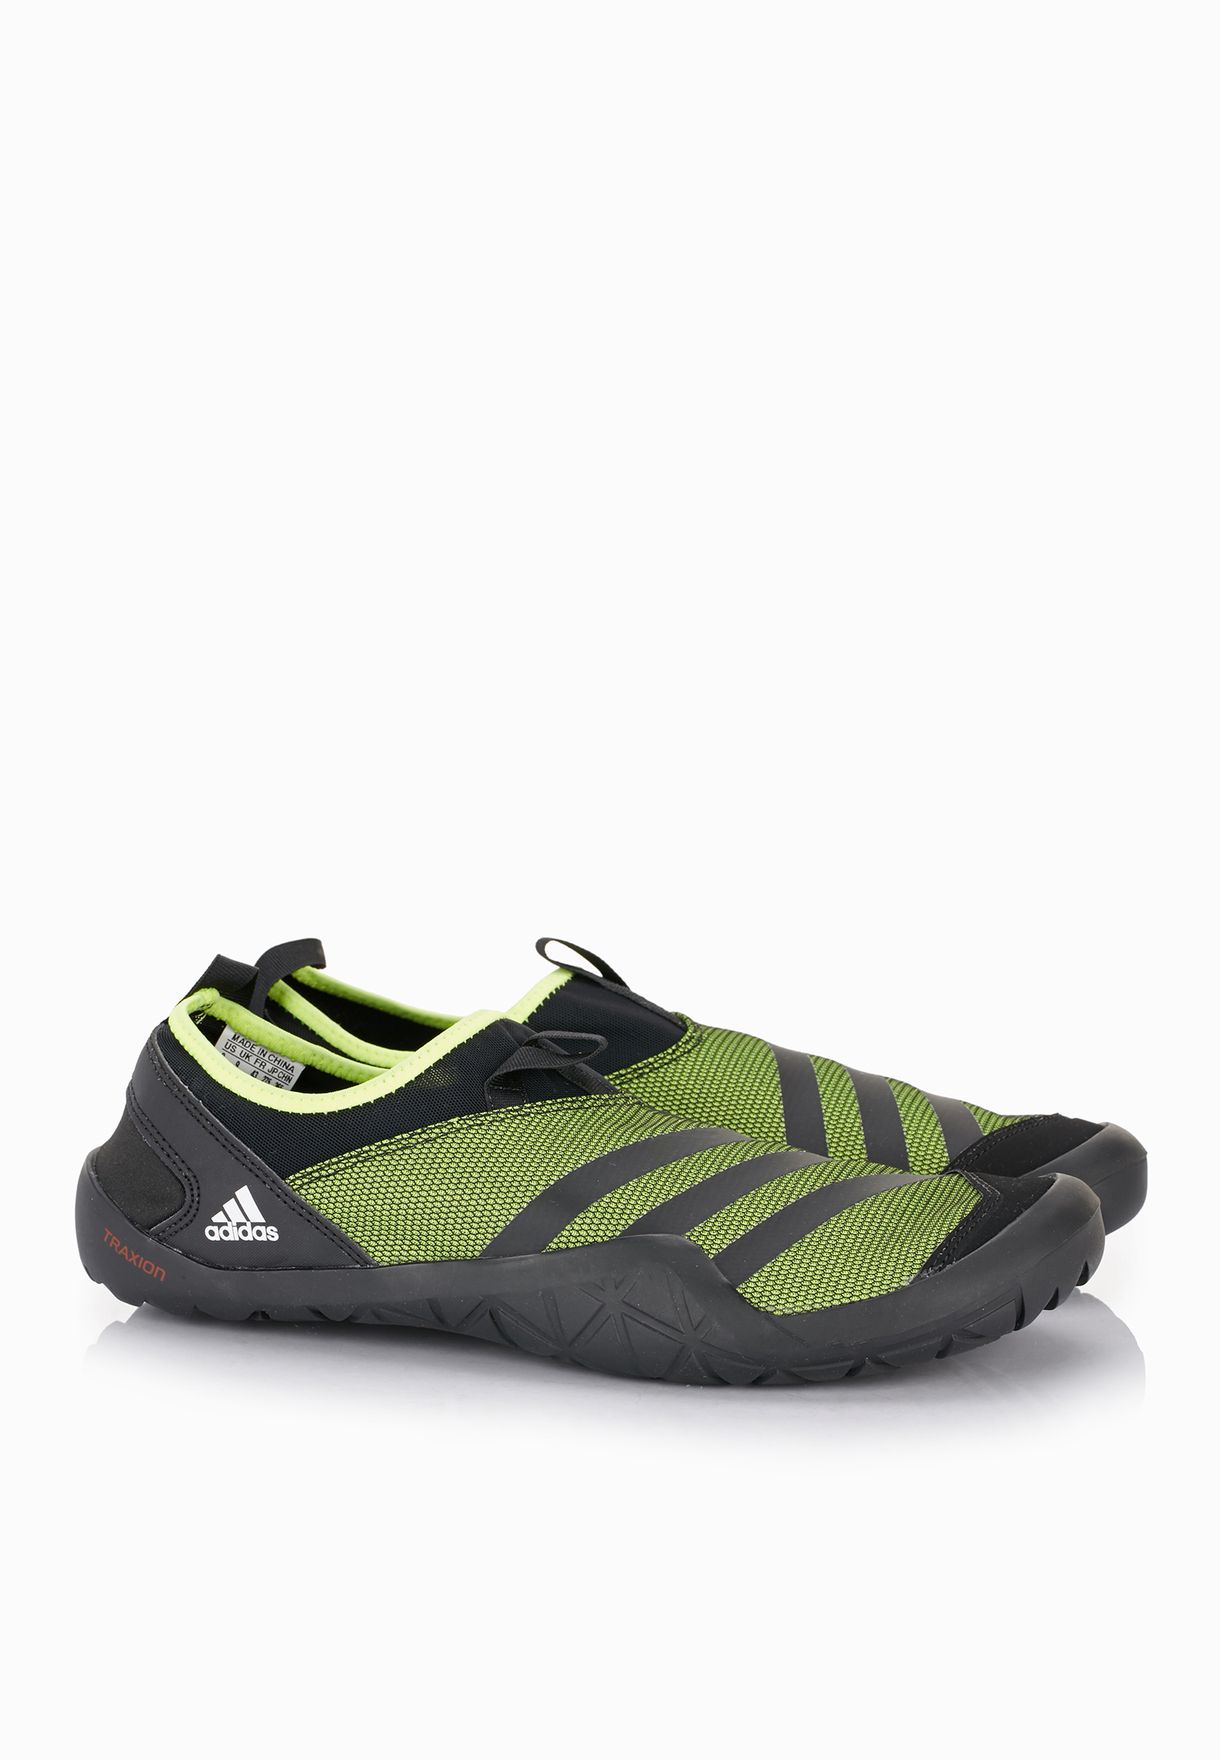 adidas climacool jawpaw slip on ss16 erkek spor ayakkabı